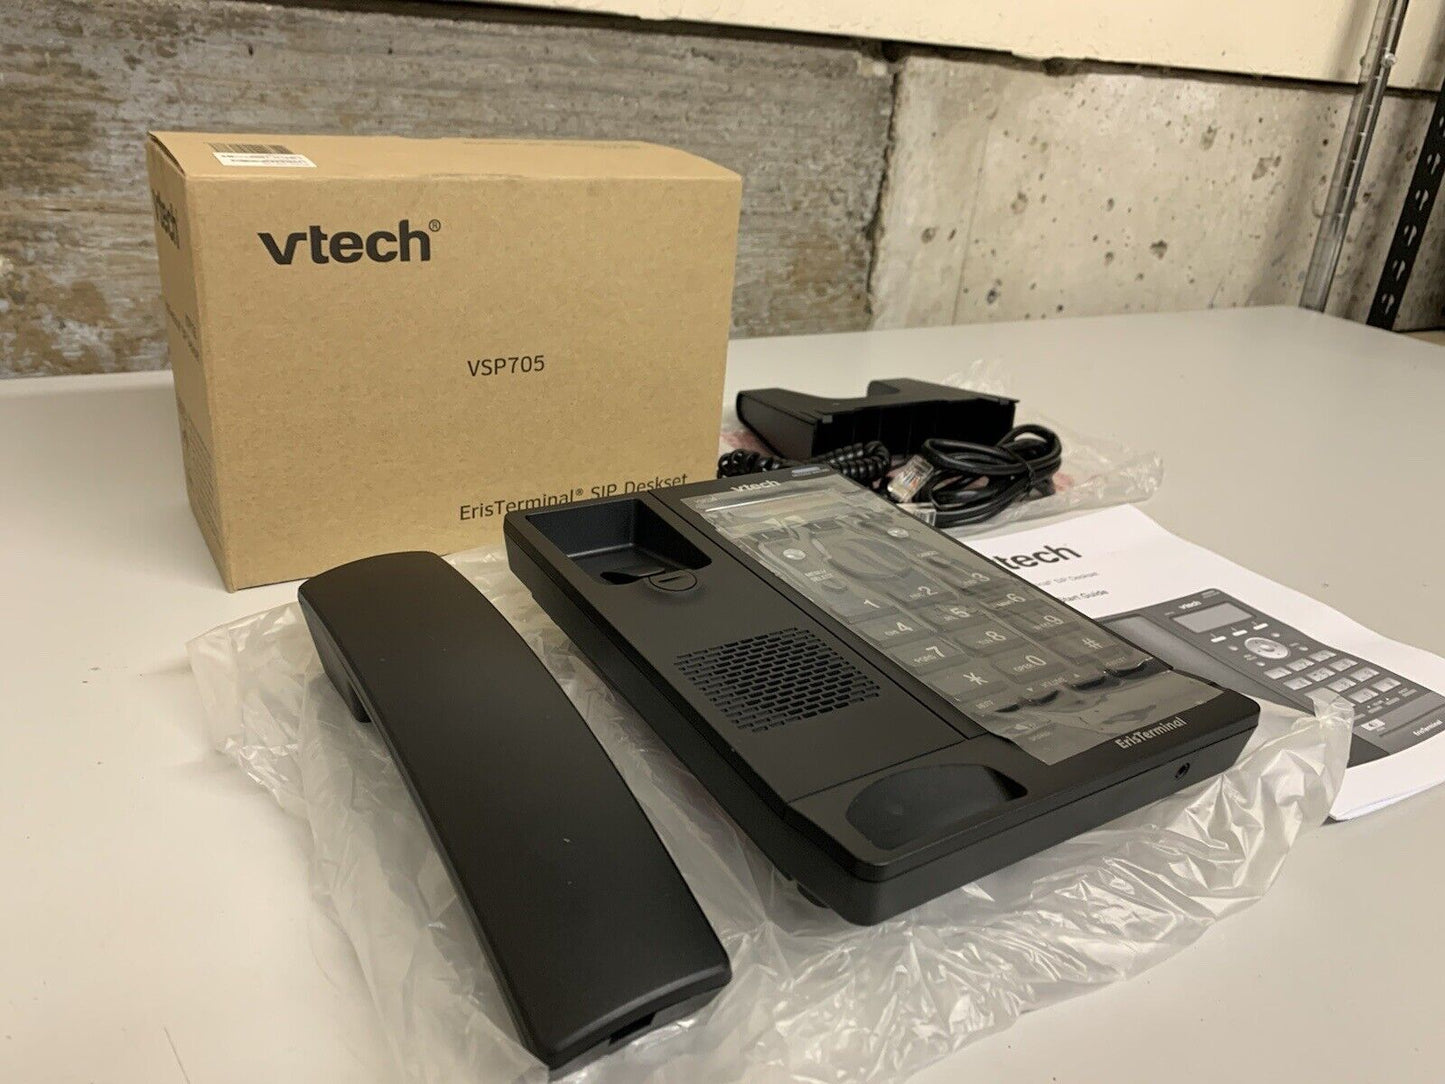 Vtech VSP705 ErisTerminal Deskset